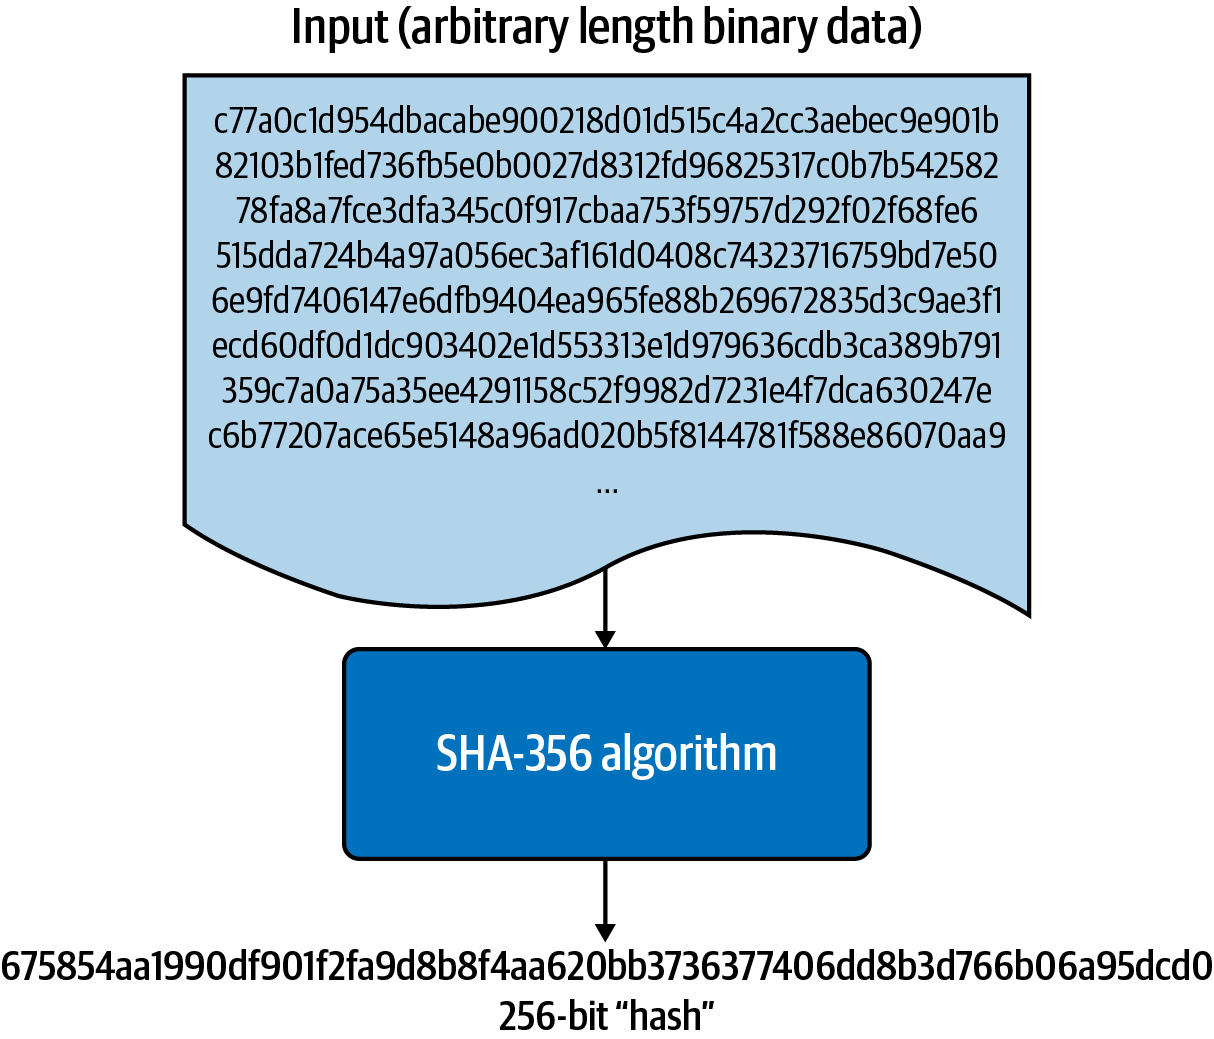 The SHA-256 cryptographic hash algorithm